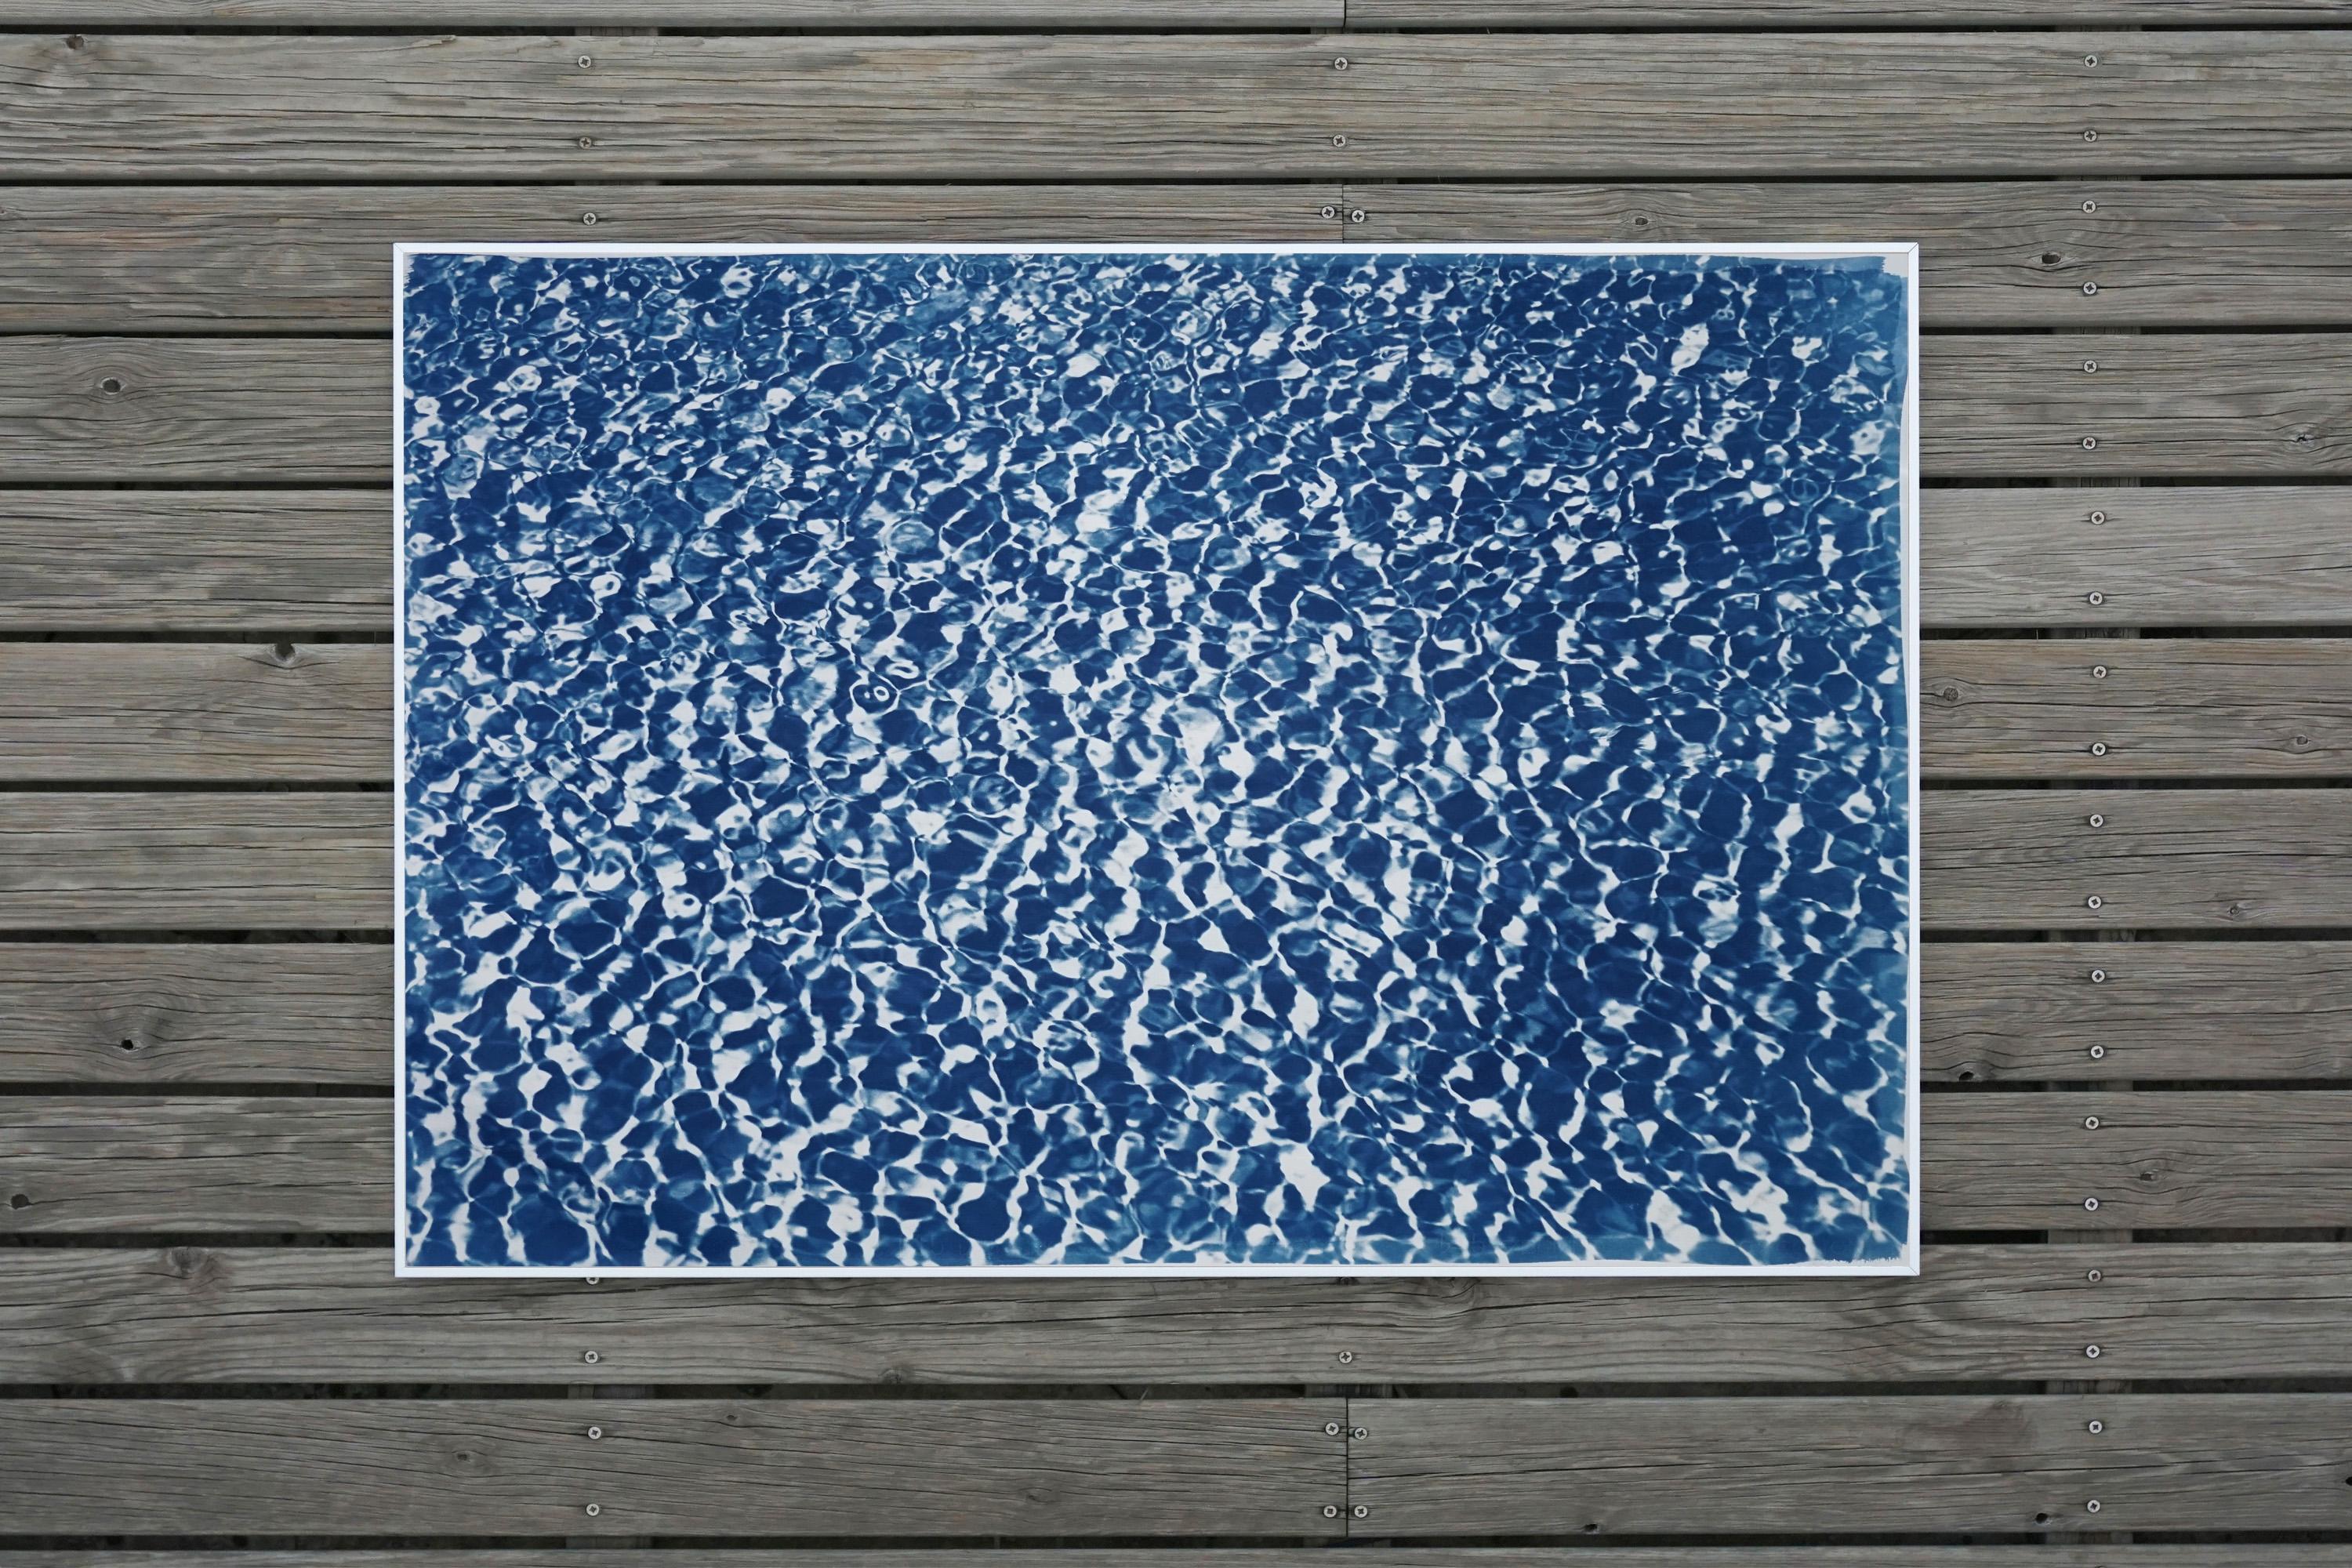 Infinity Pool Water Reflections, Blue & White Pattern, Handmade Cyanotype Print 3